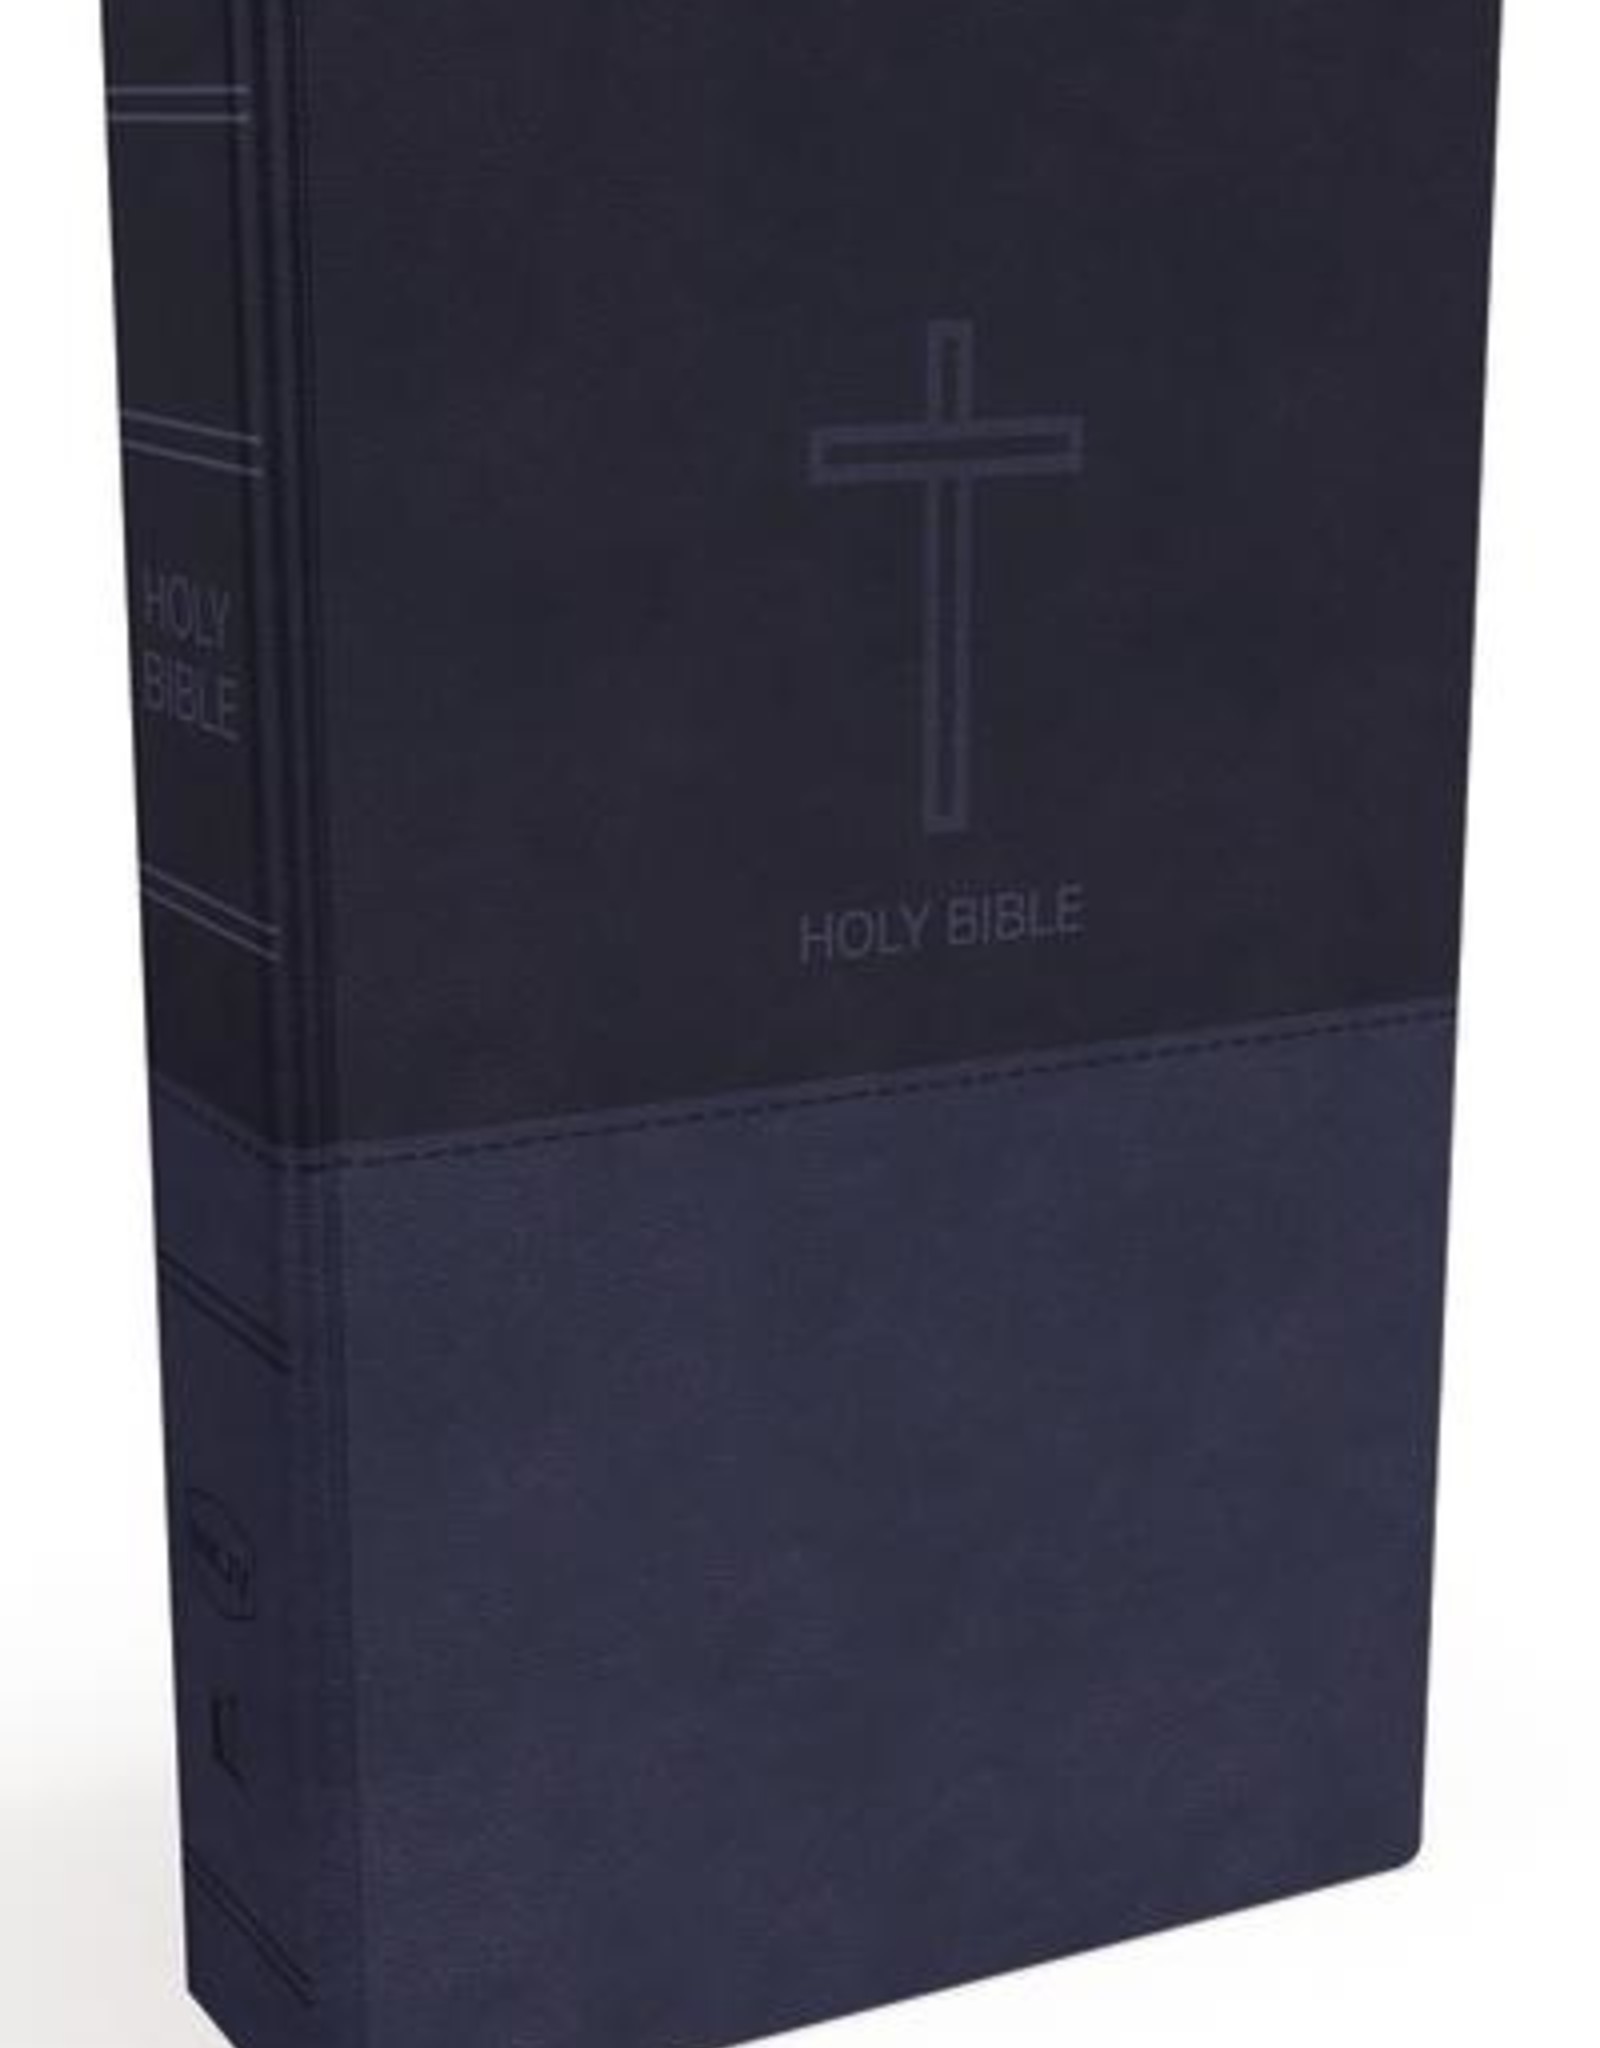 NKJV Thinline Bible - Navy Blue